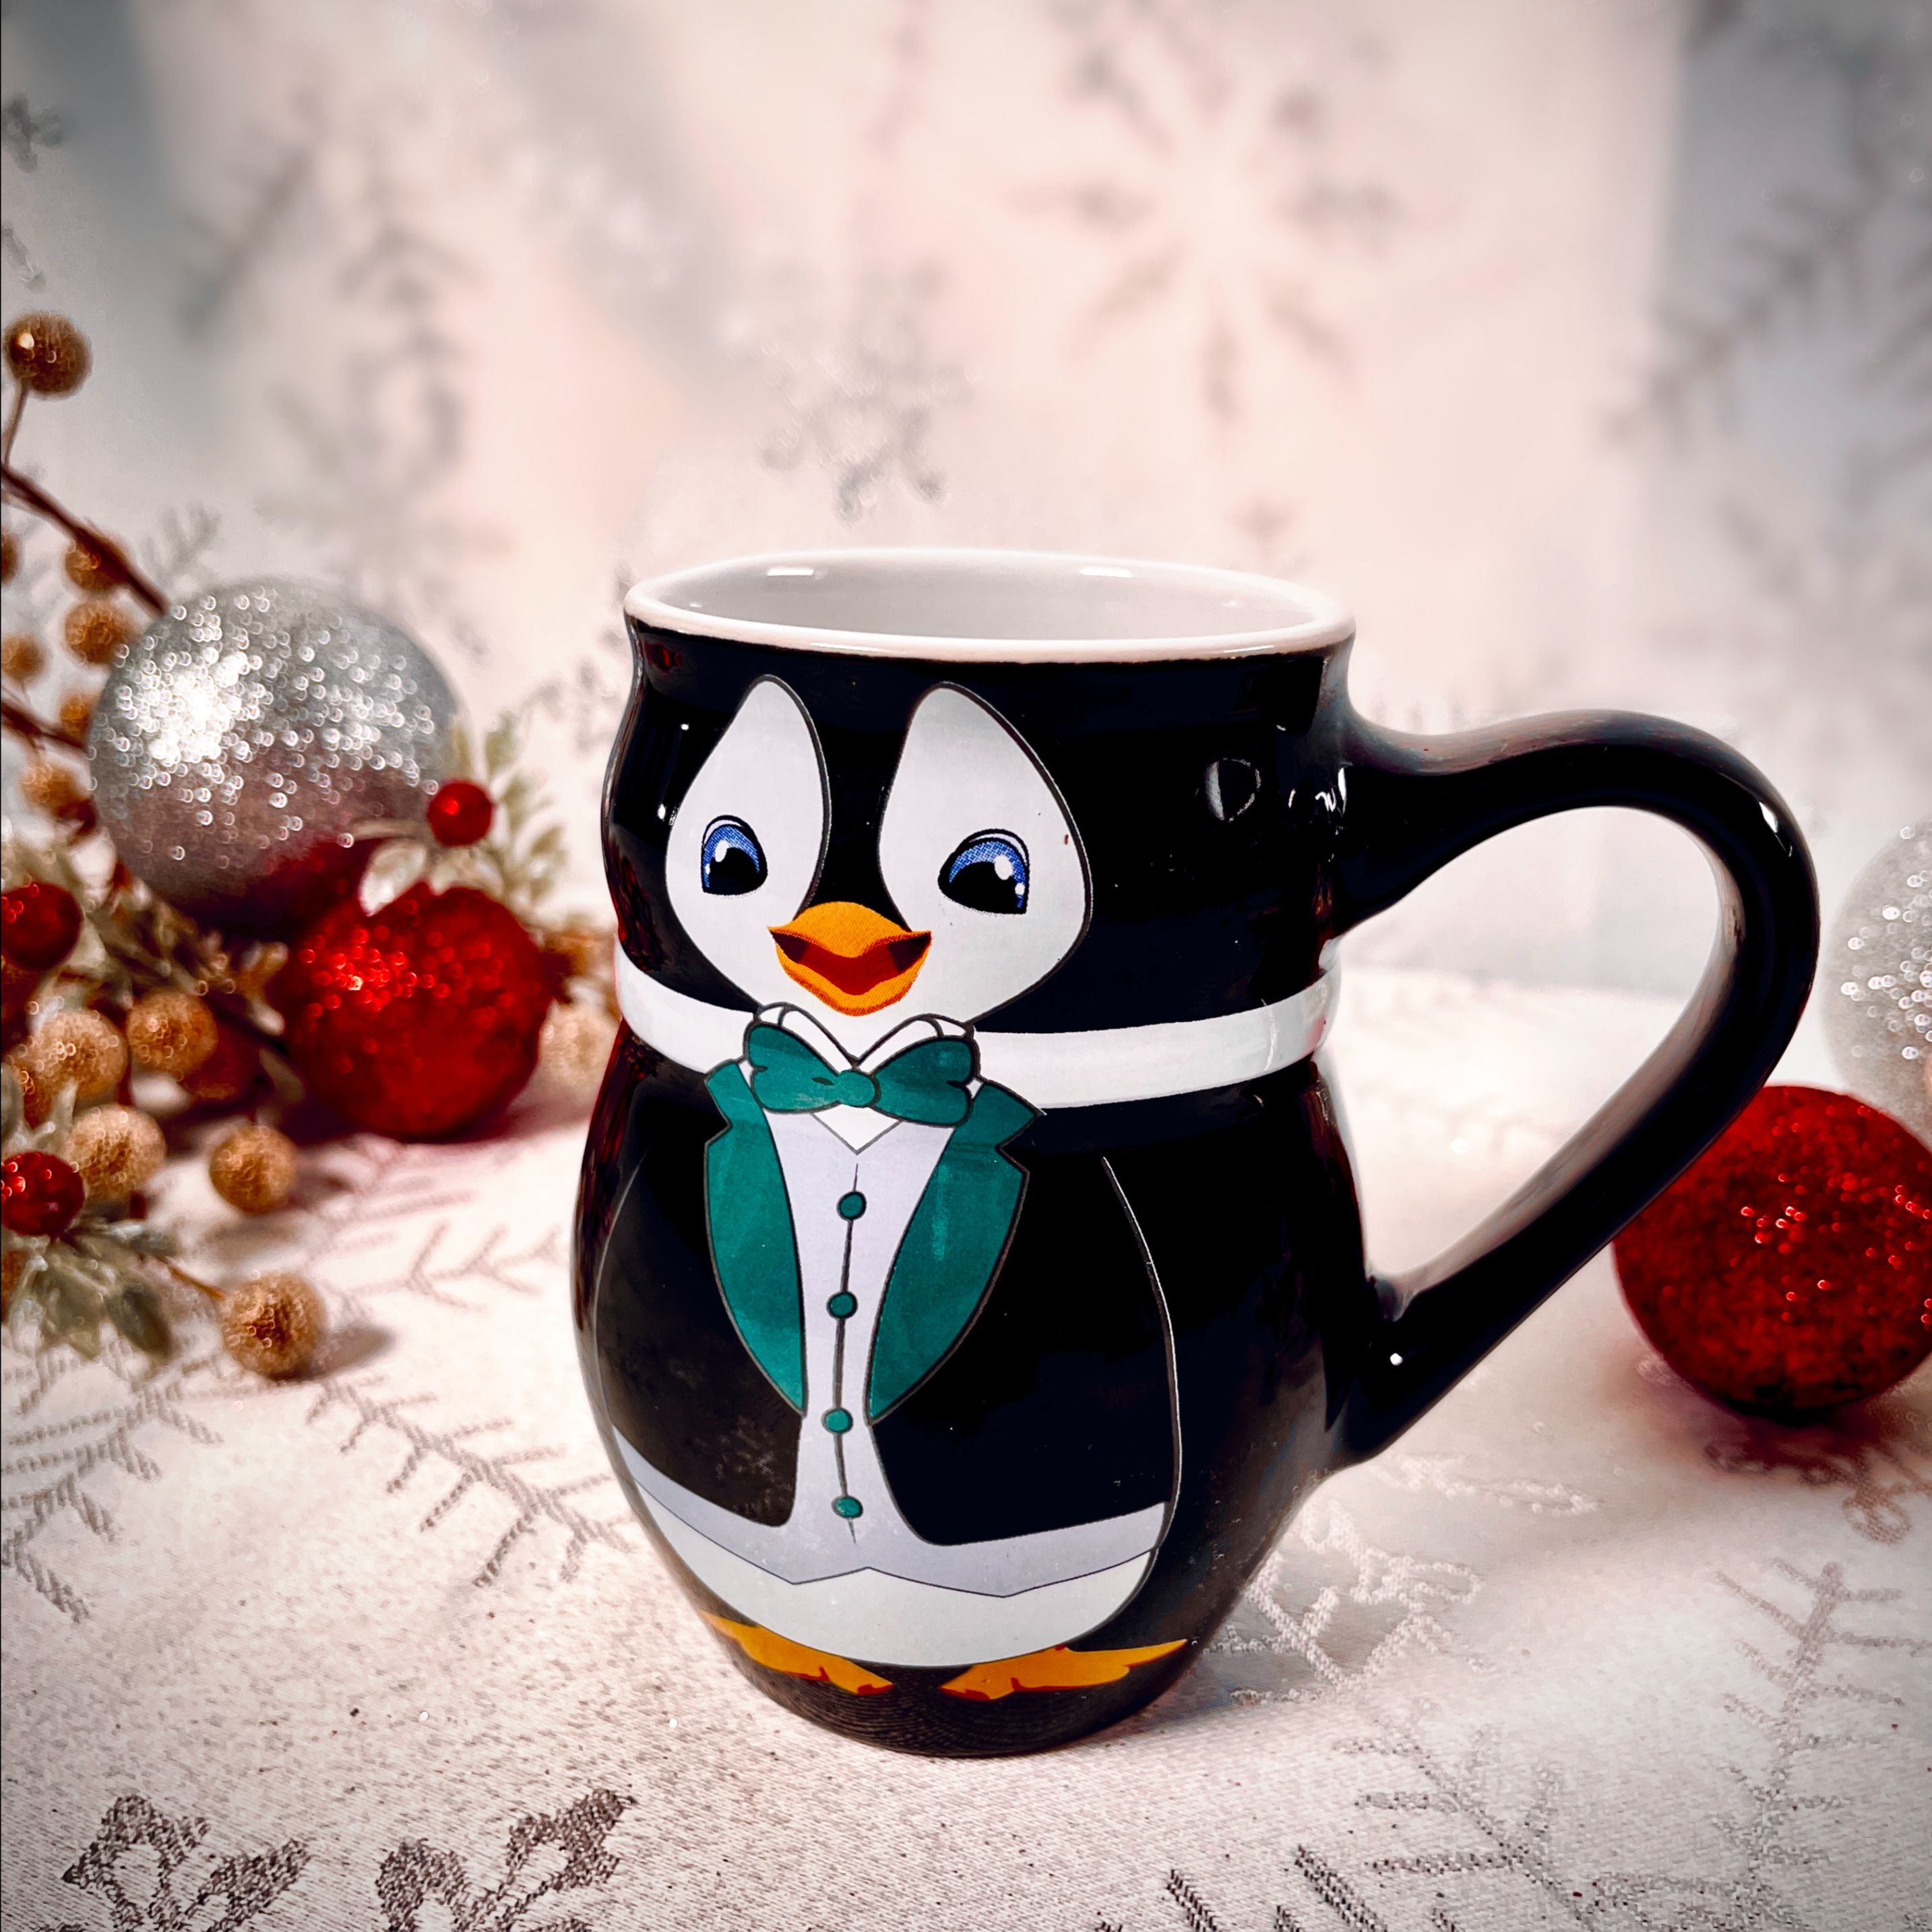 Christkindlmarket mug design revealed, first annual ornament announced